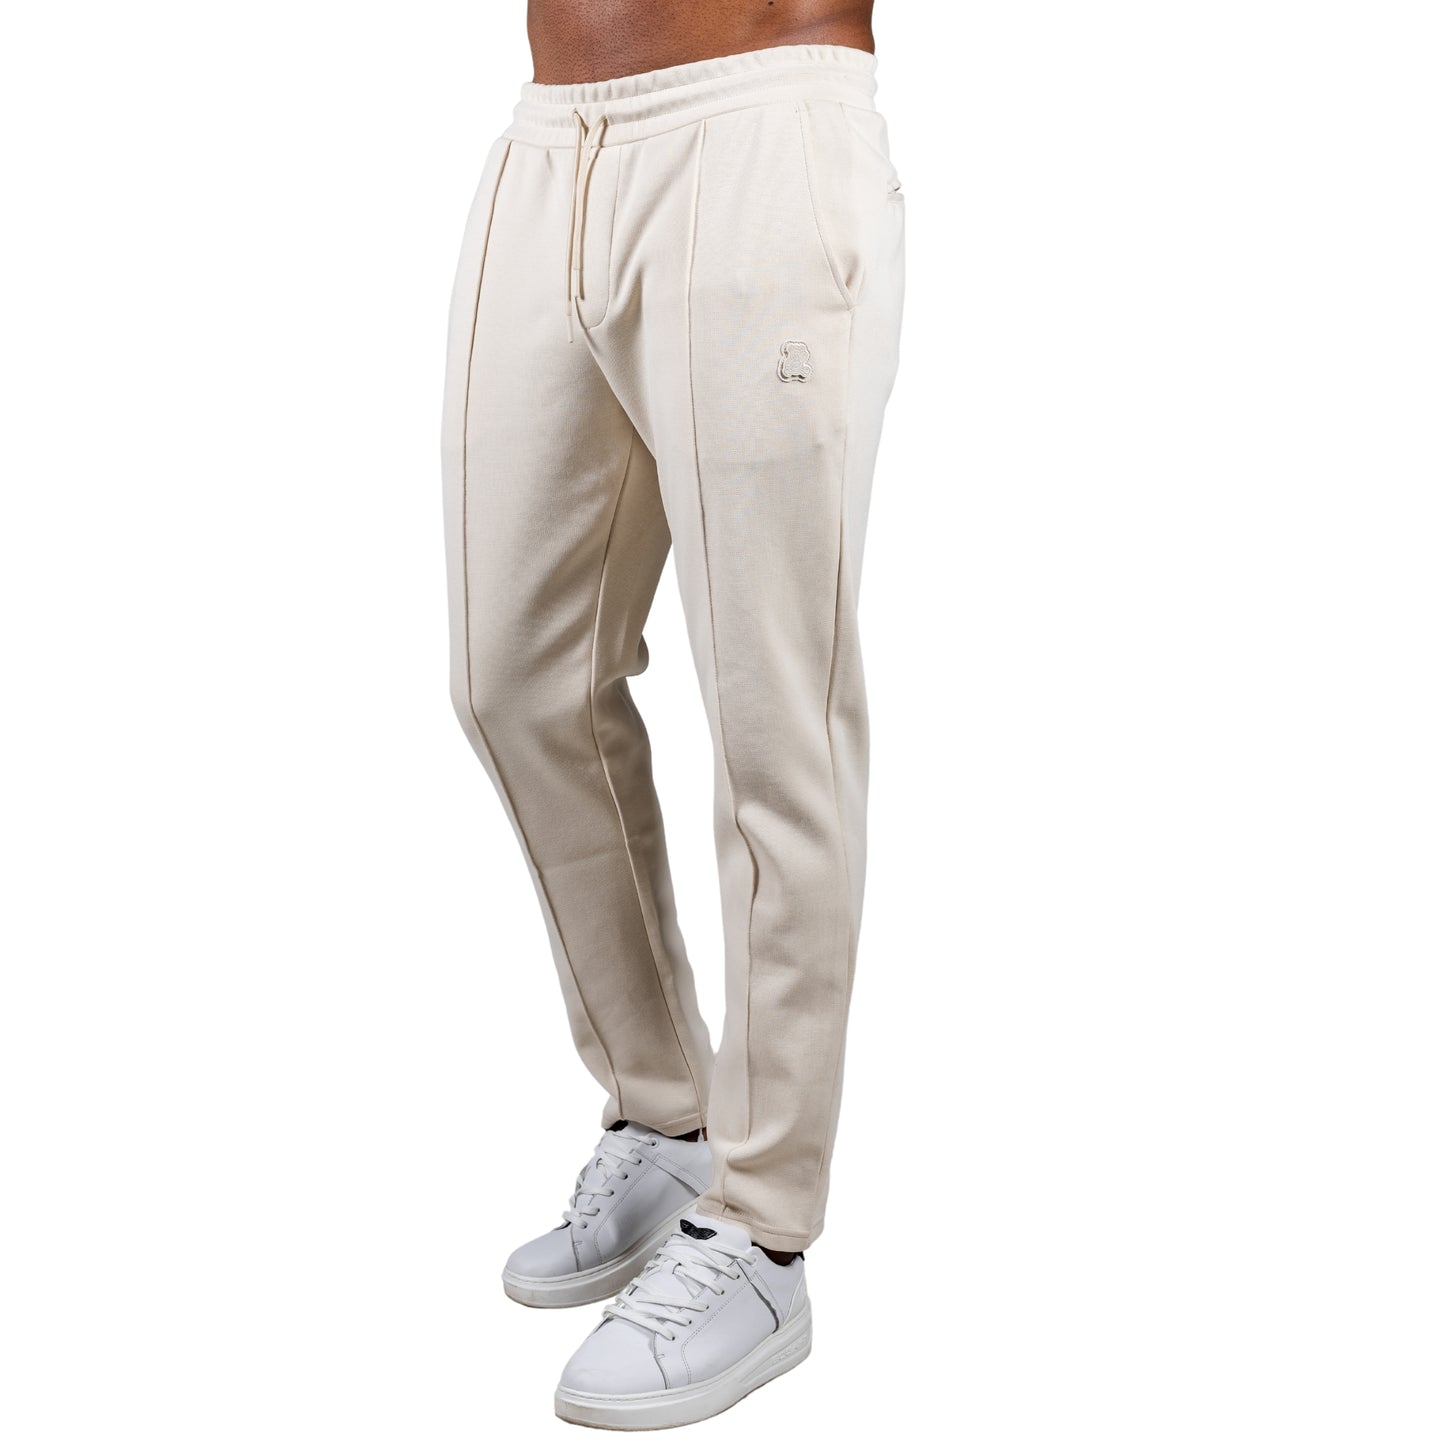 Bogart Premium Collection Essential Leisurewear Trousers